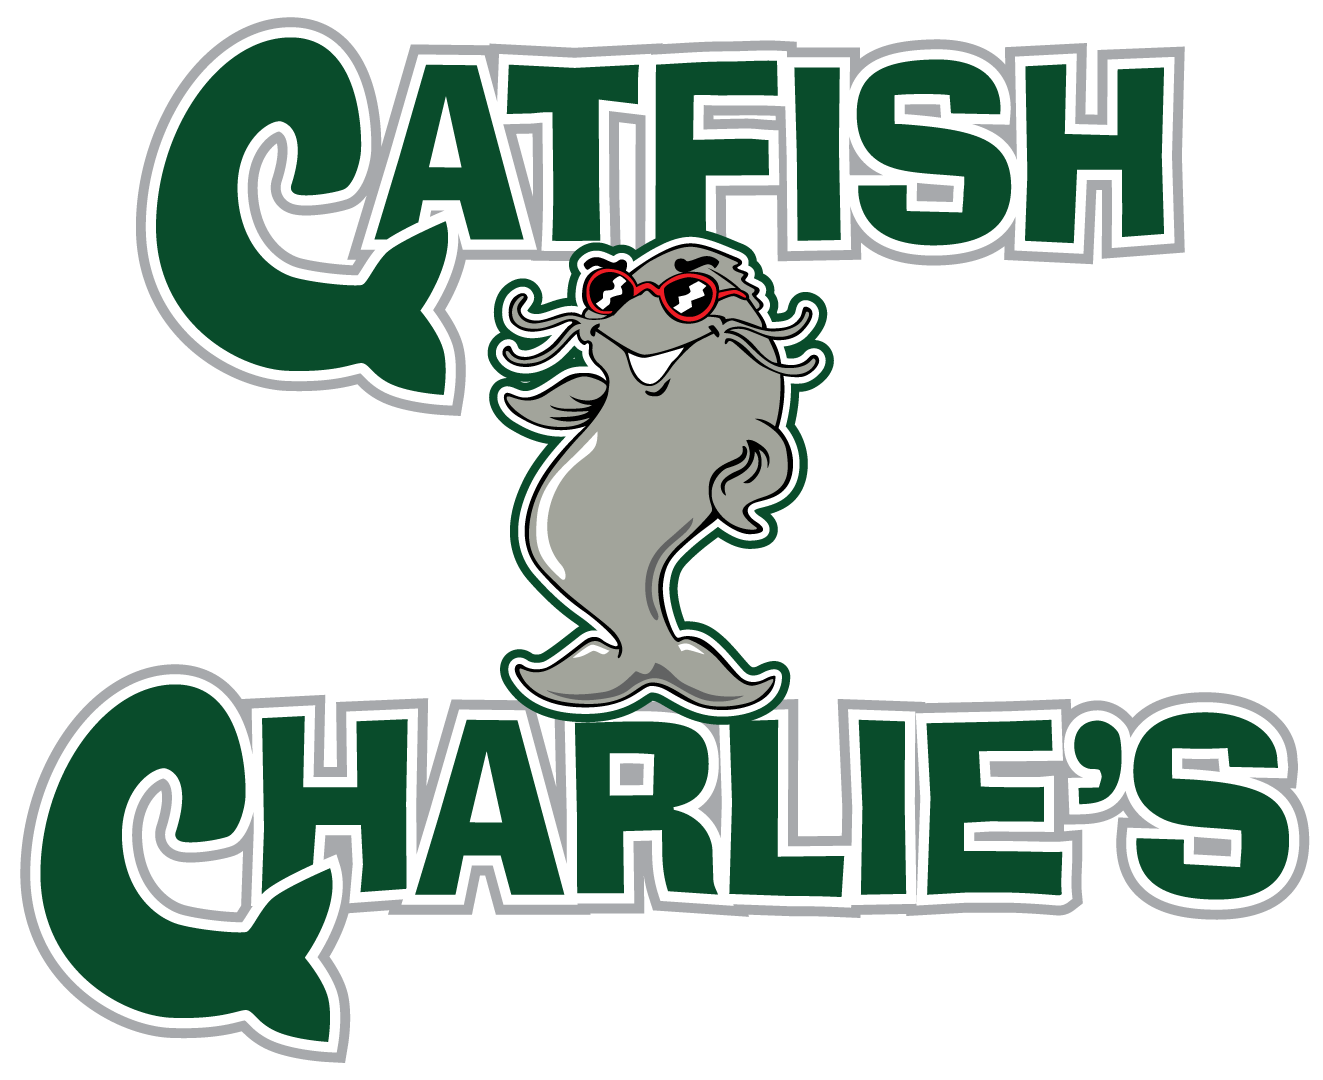 Catfish Charlie's